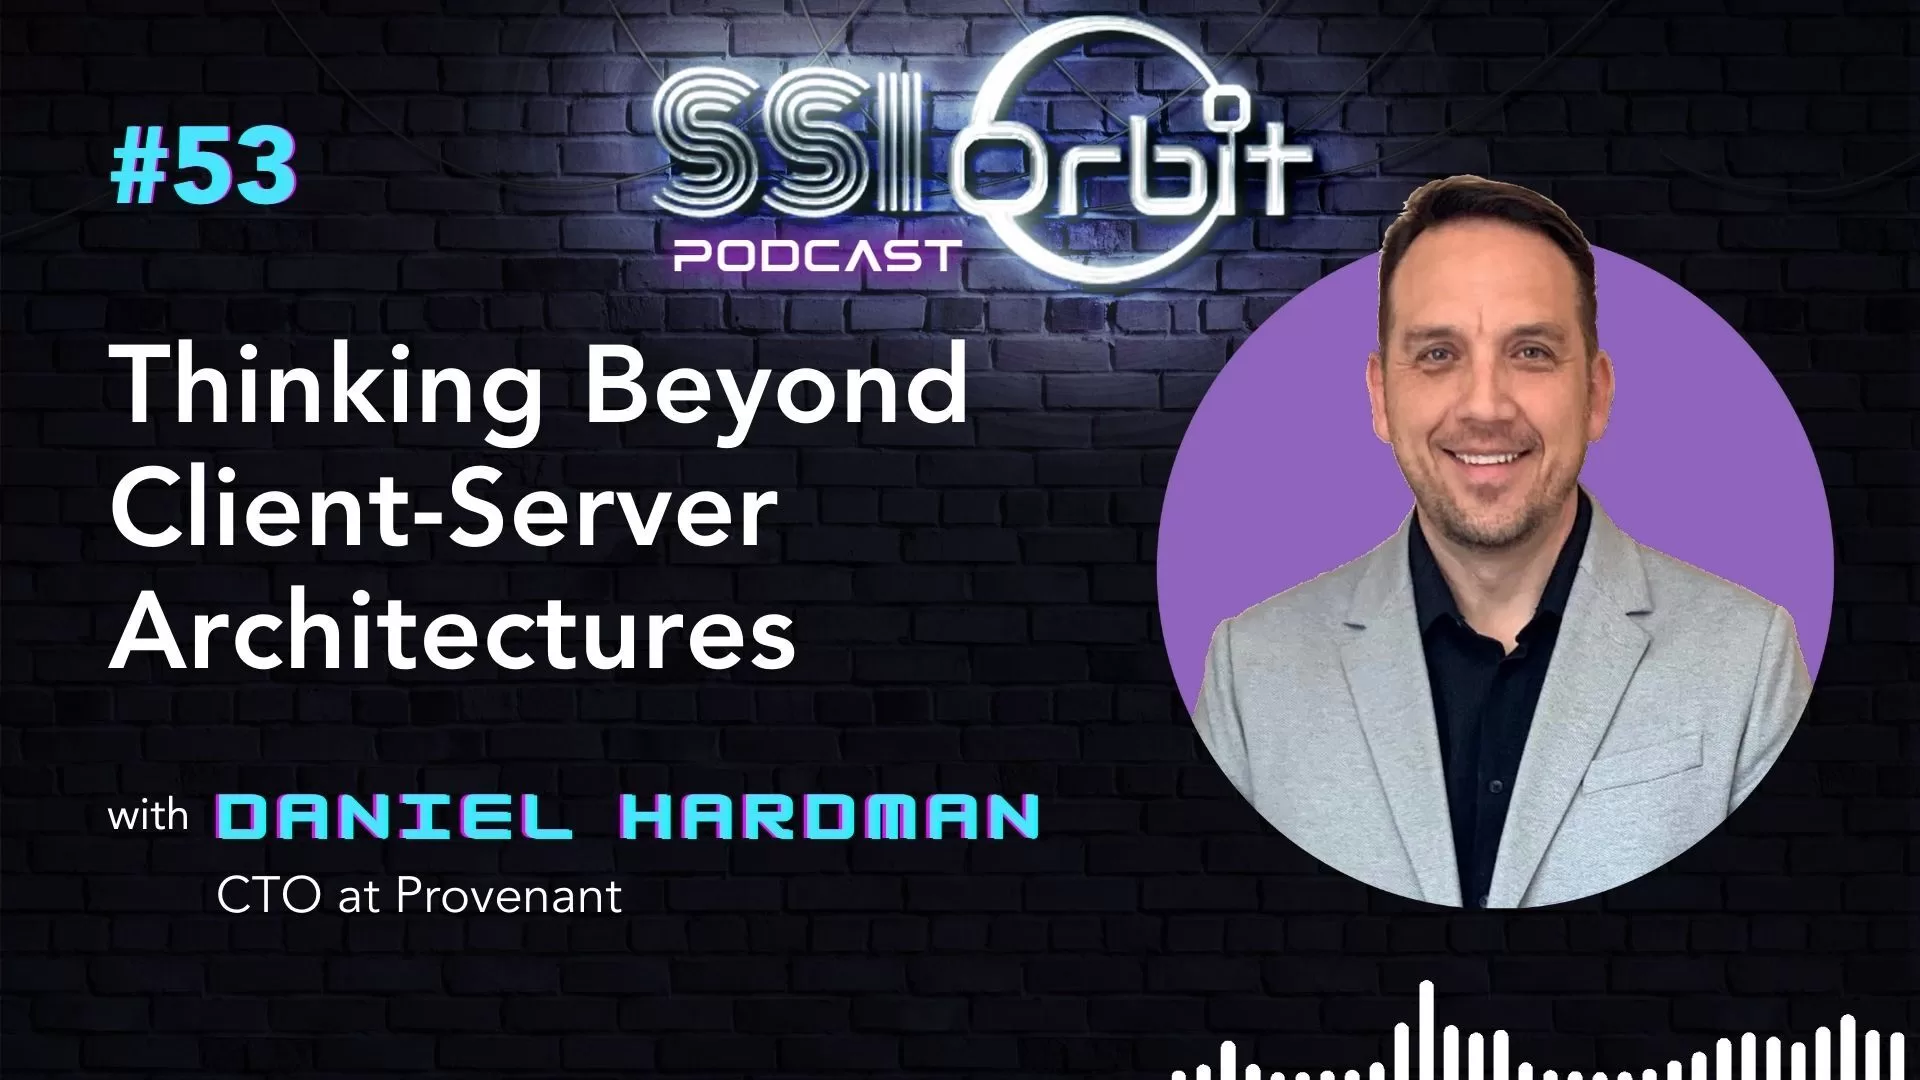 Thinking Beyond Client-Server Architectures (with Daniel Hardman)